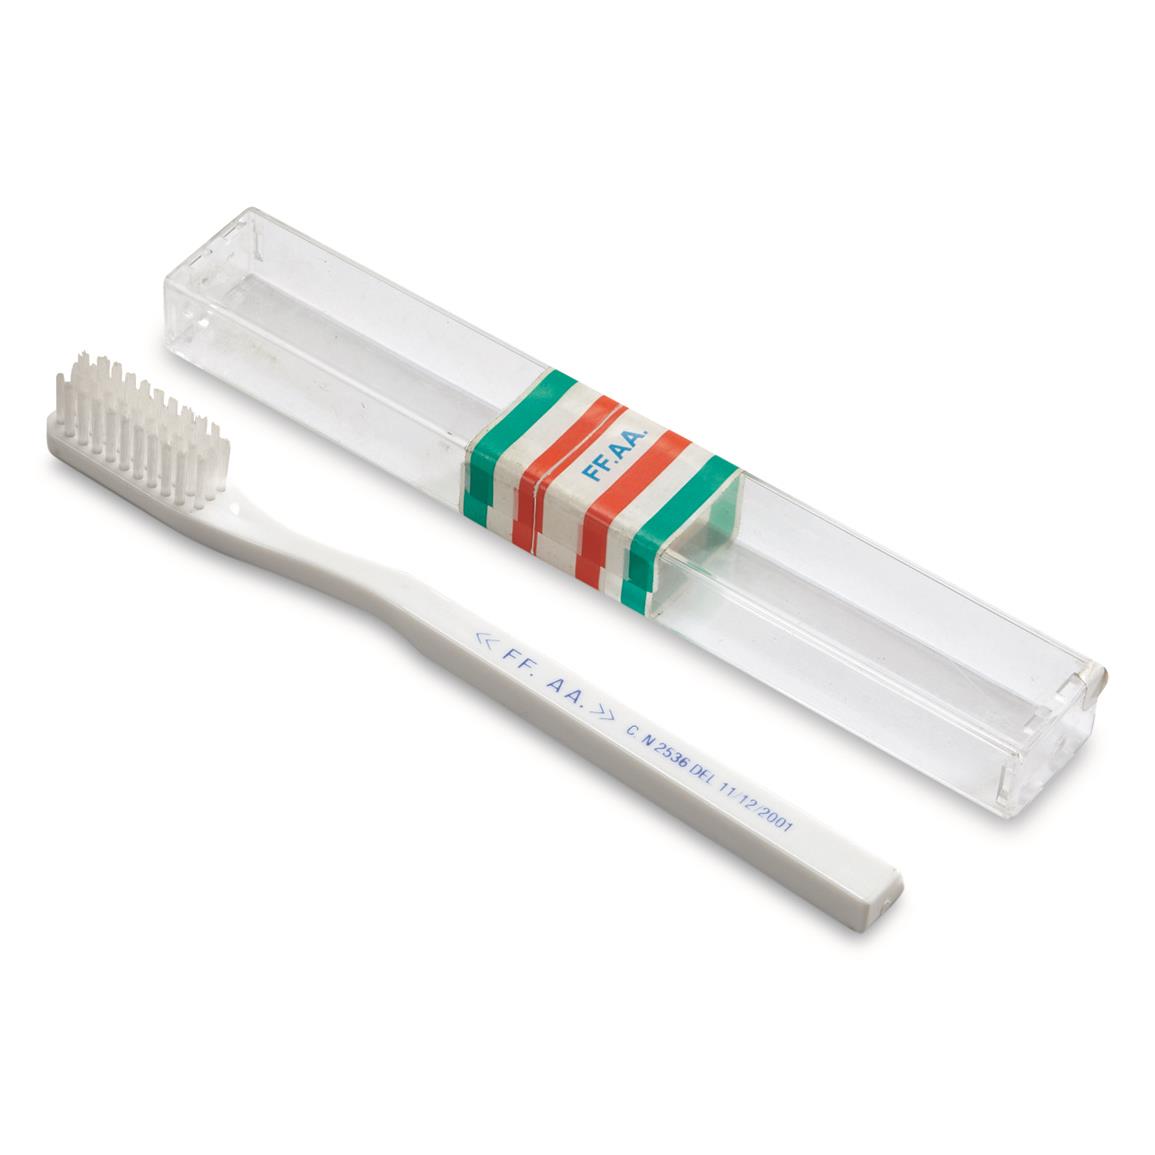 Italian Military Surplus Toothbrushes, 10 Pack, New